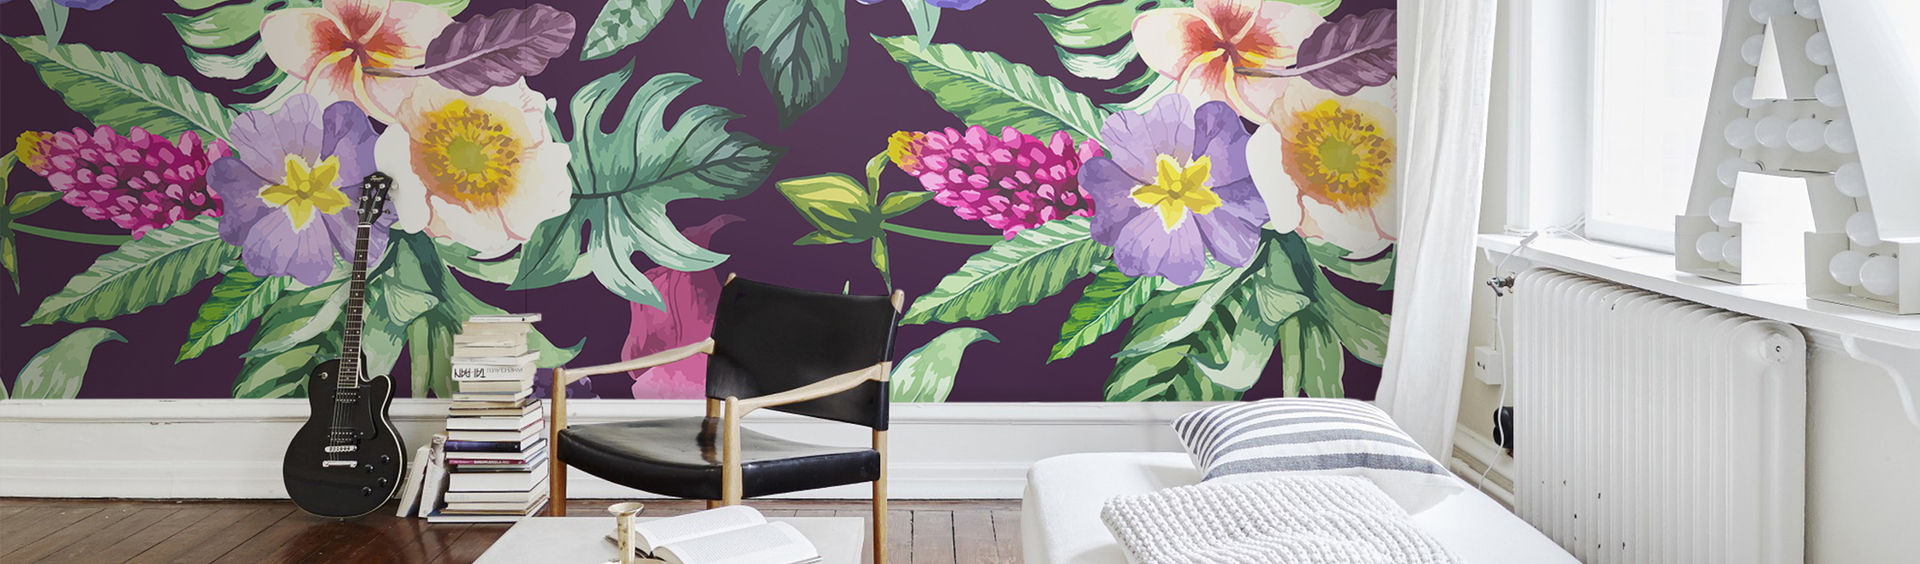 Purple Flowers Pixers Habitaciones de estilo tropical wall mural,wallpaper,flowers,tropical,leaves